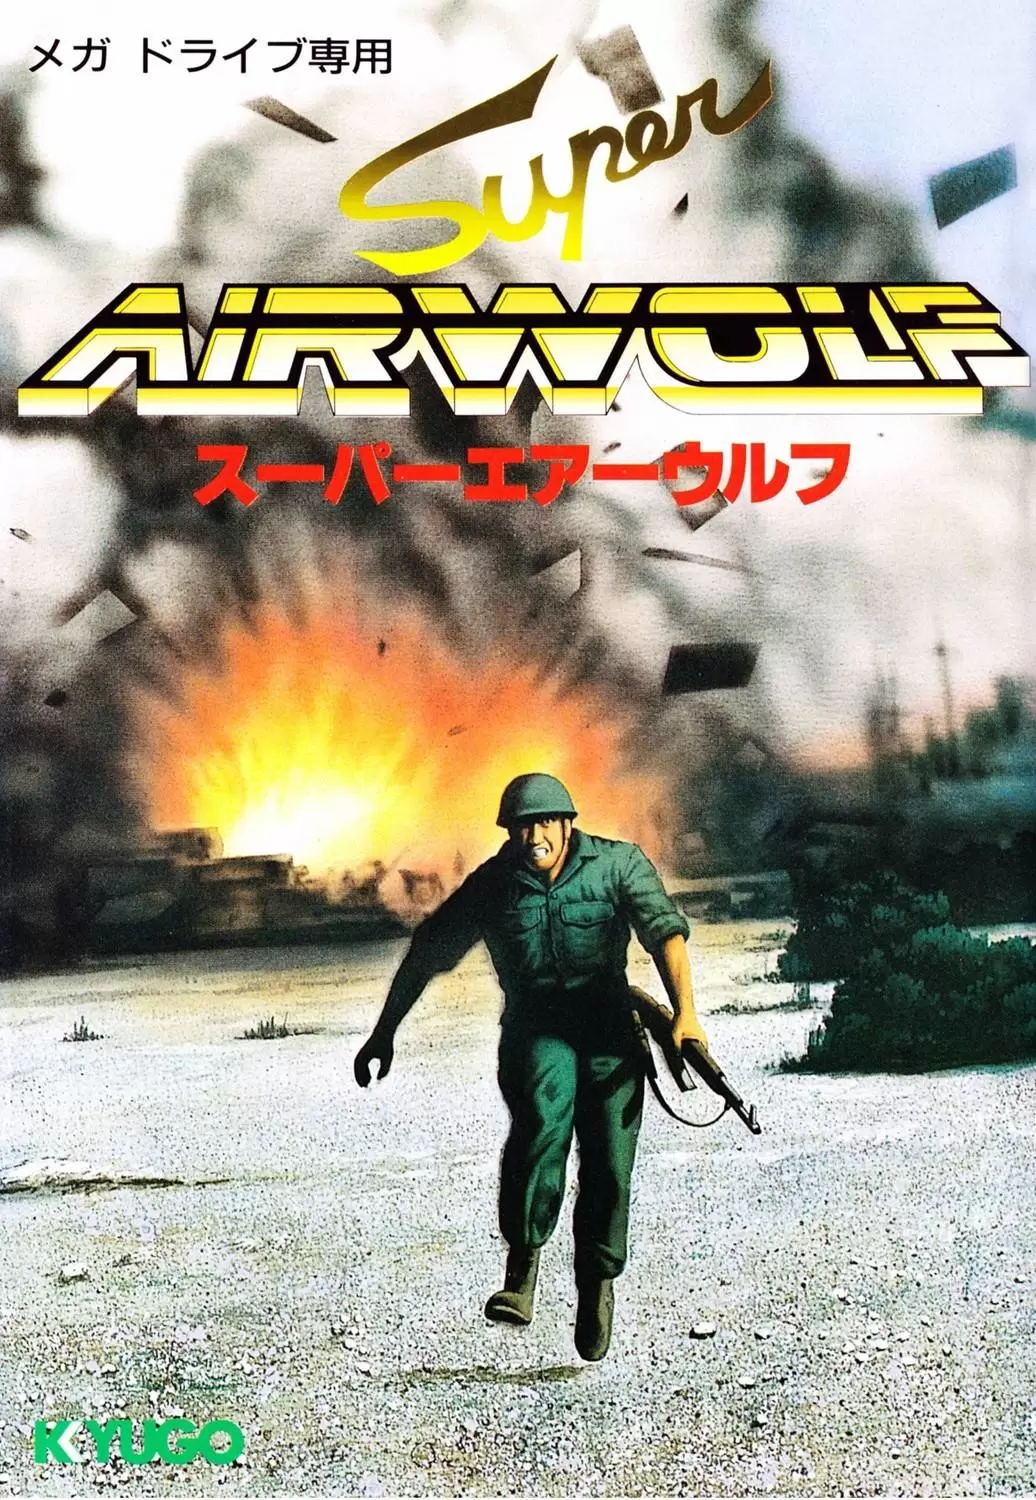 Sega Genesis Games - Super Airwolf